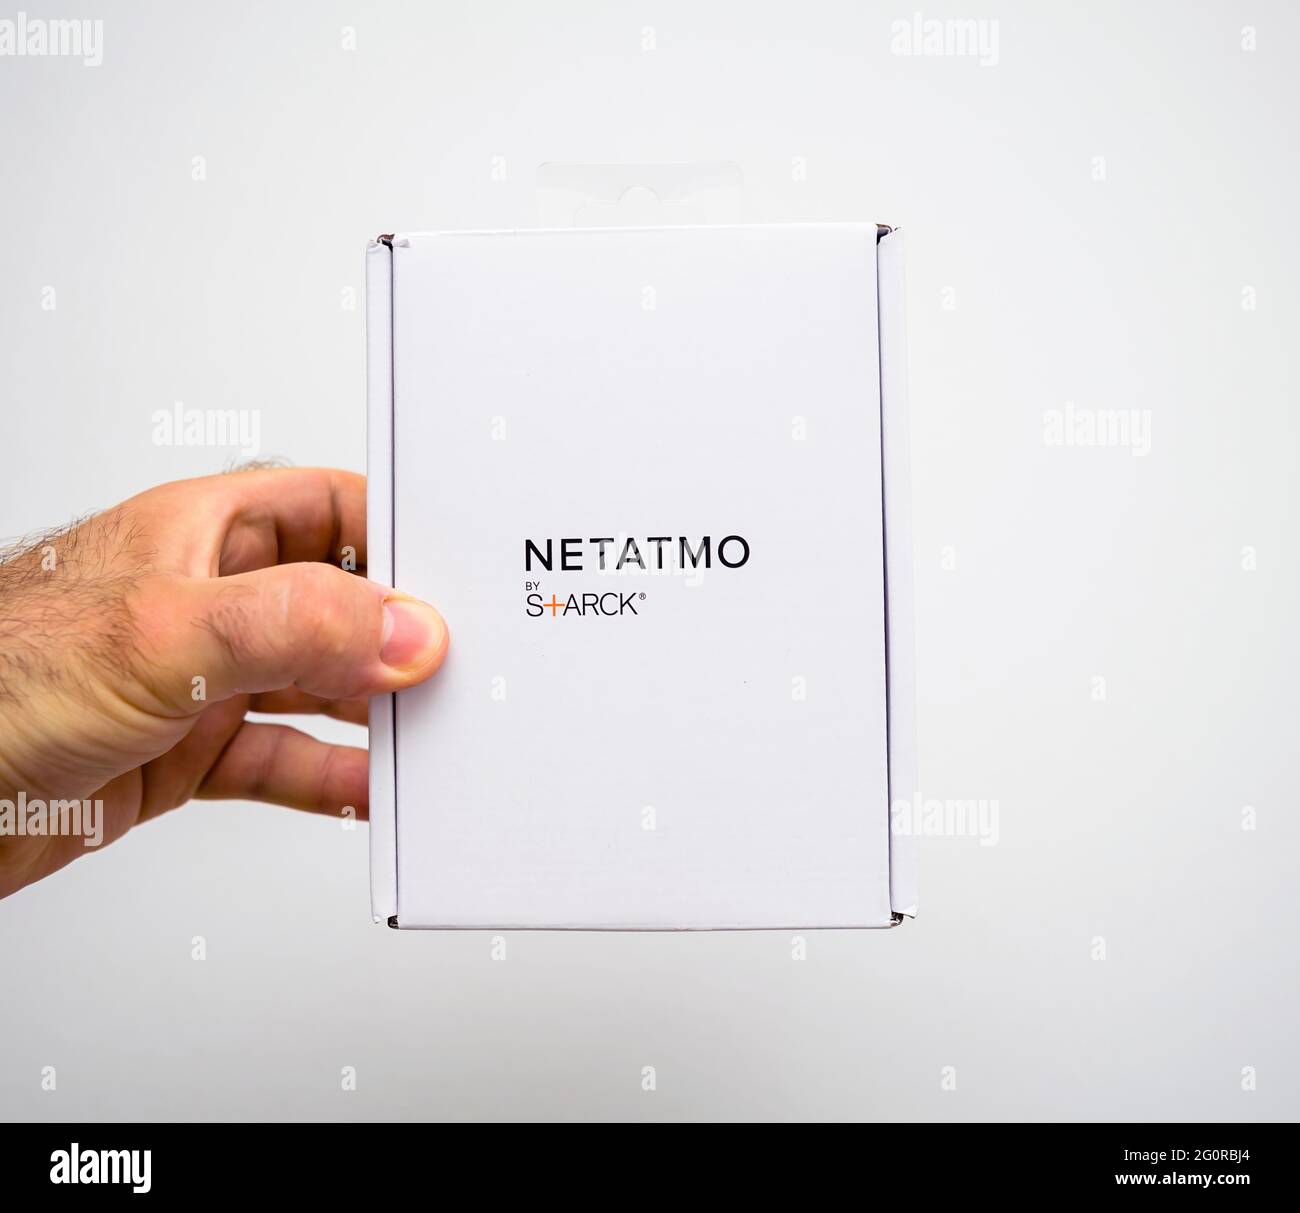 Netatmo Heizkörper Thermostat Ventil von Philippe Starck Stockfoto